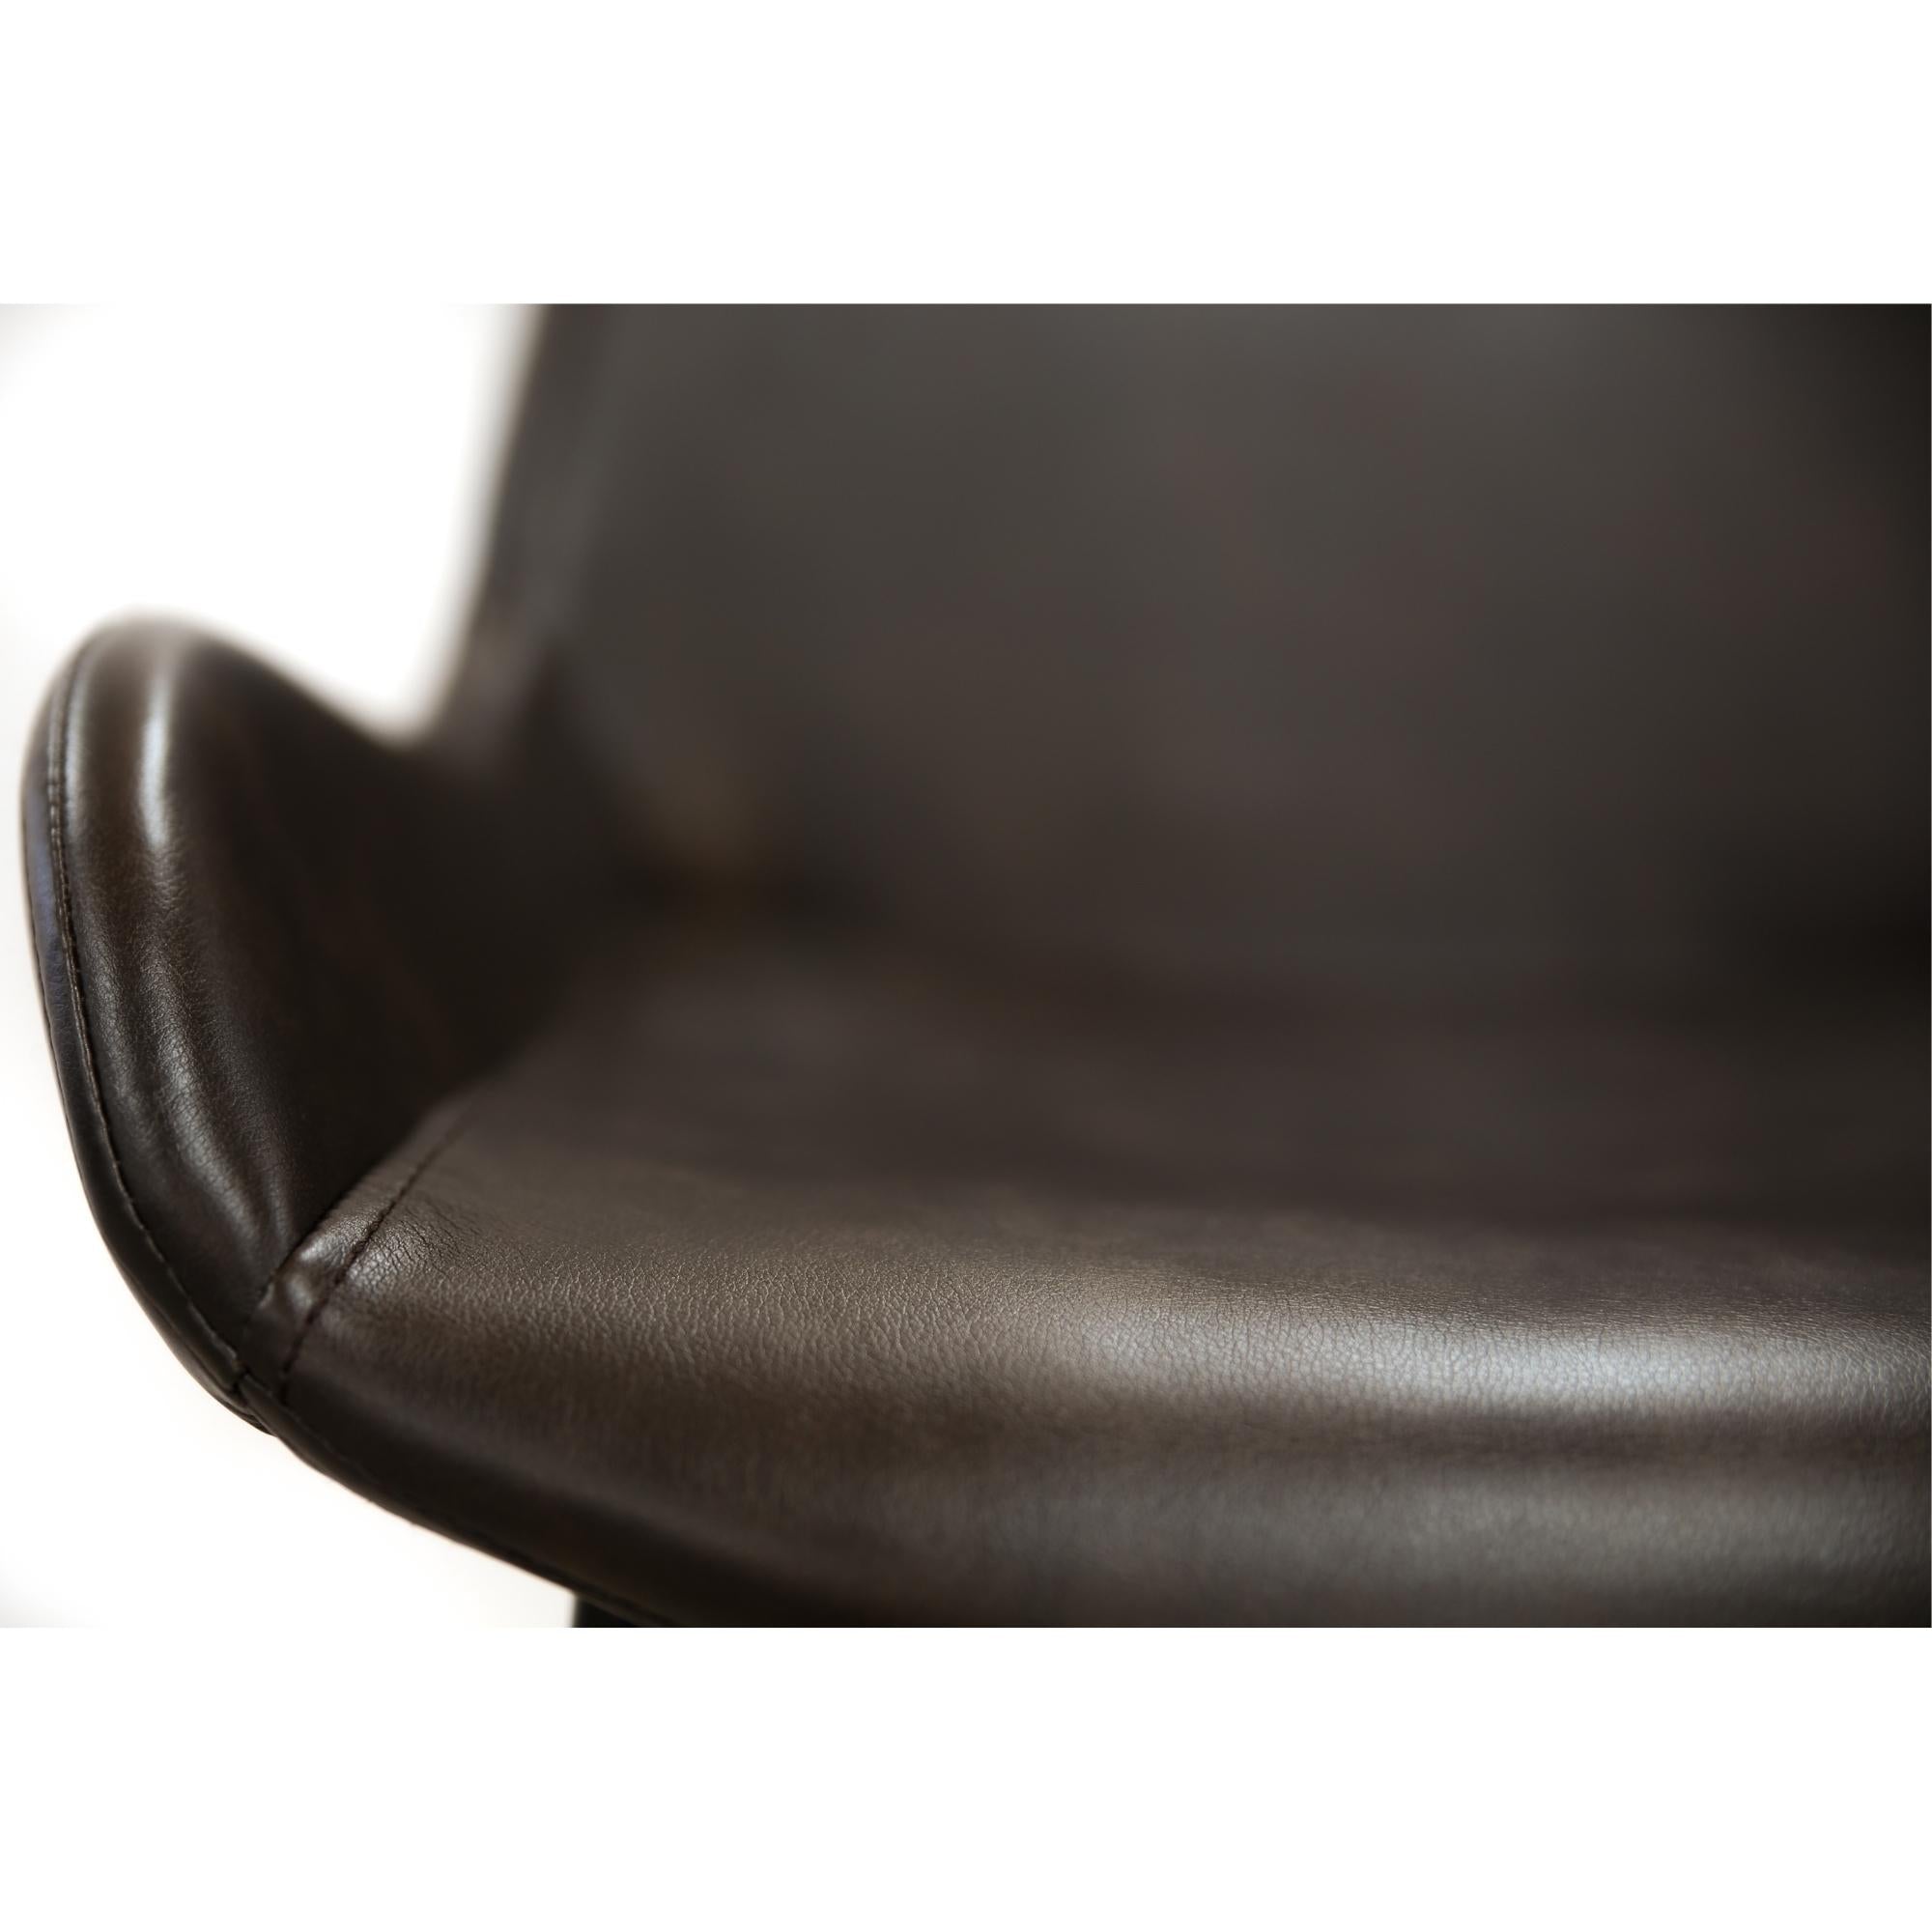 Brando  Set of 4 PU Leather Upholstered Bar Chair Metal Leg Stool - Brown Deals499